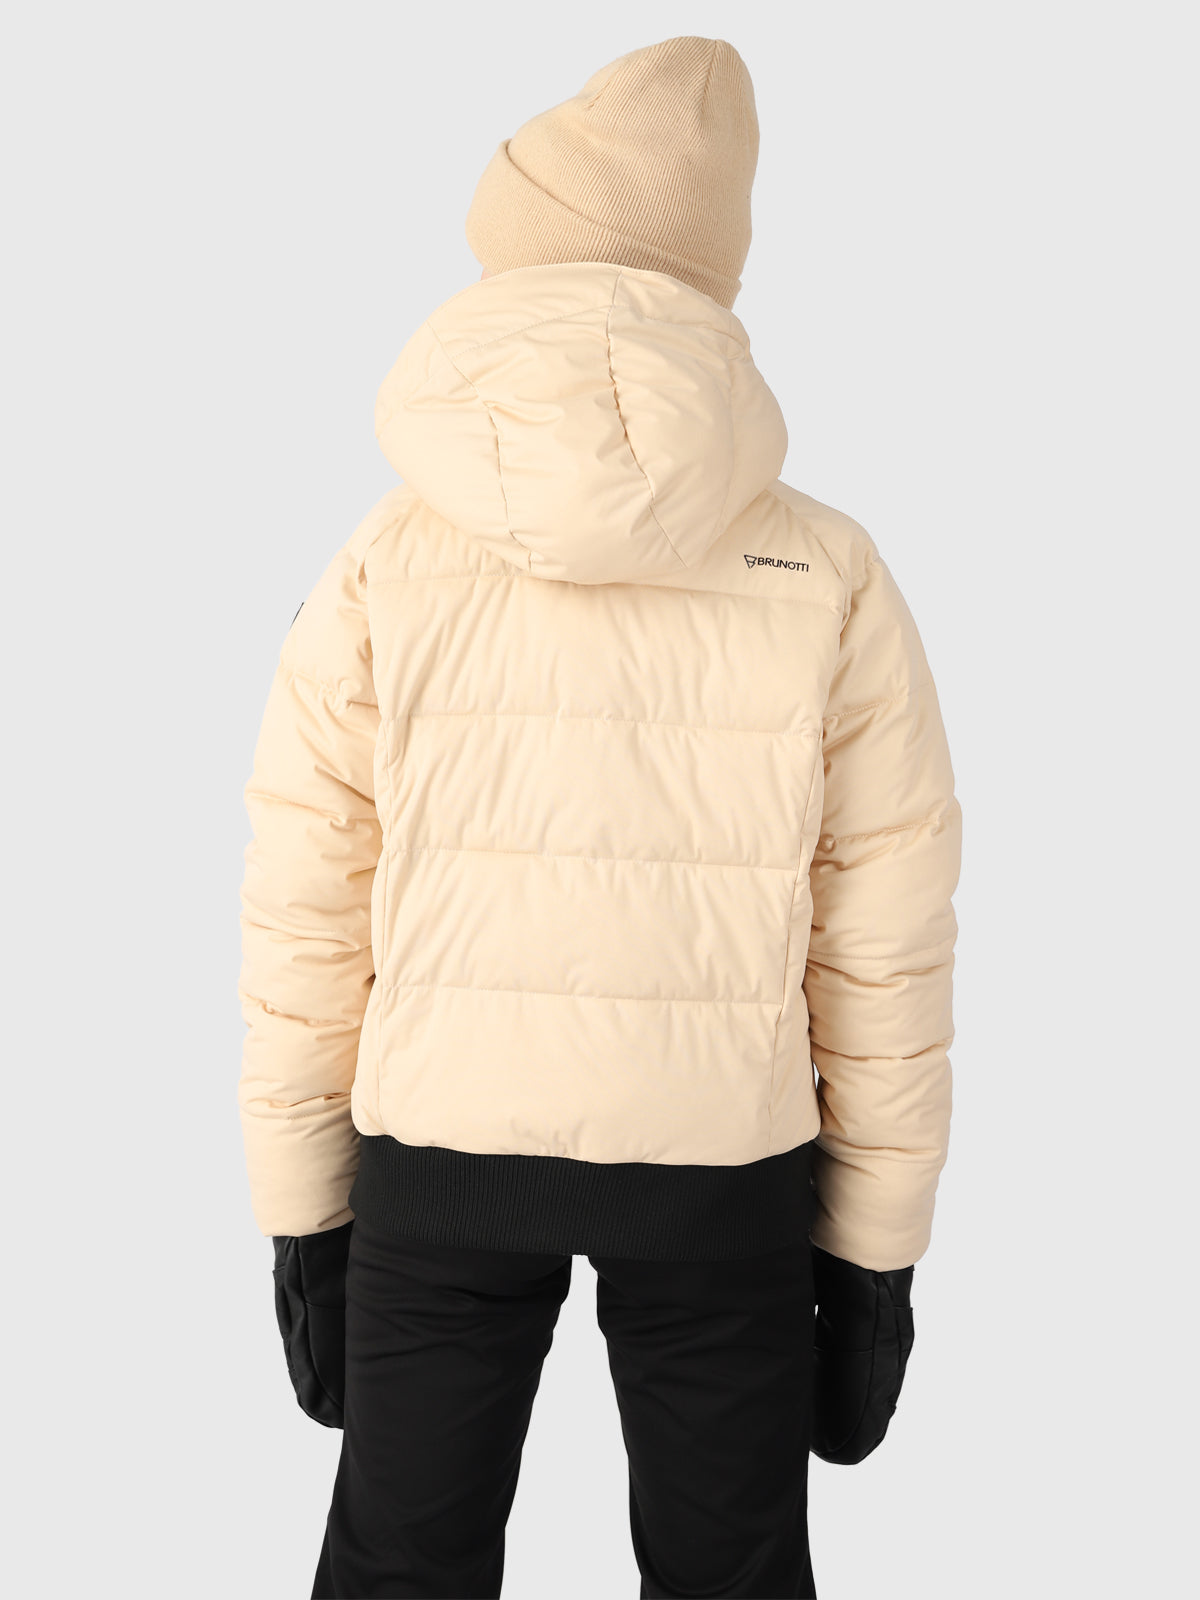 Suncrown Girls Puffer Snow Jacket | White